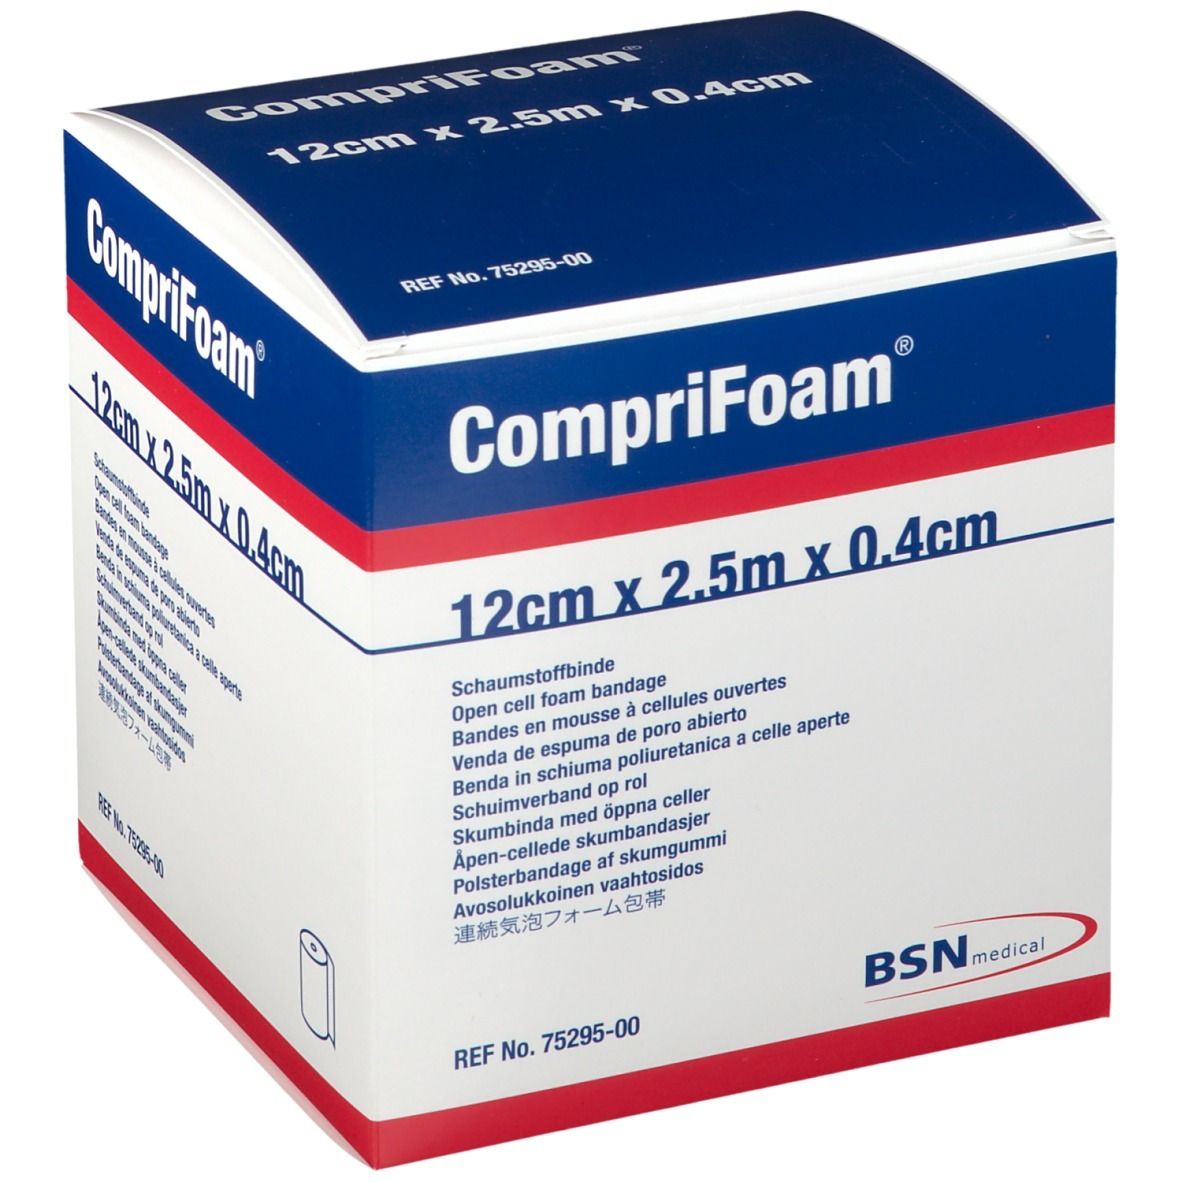 CompriFoam® Schaumstoffbinde 12 cm x 2,5 m x 0,4 cm